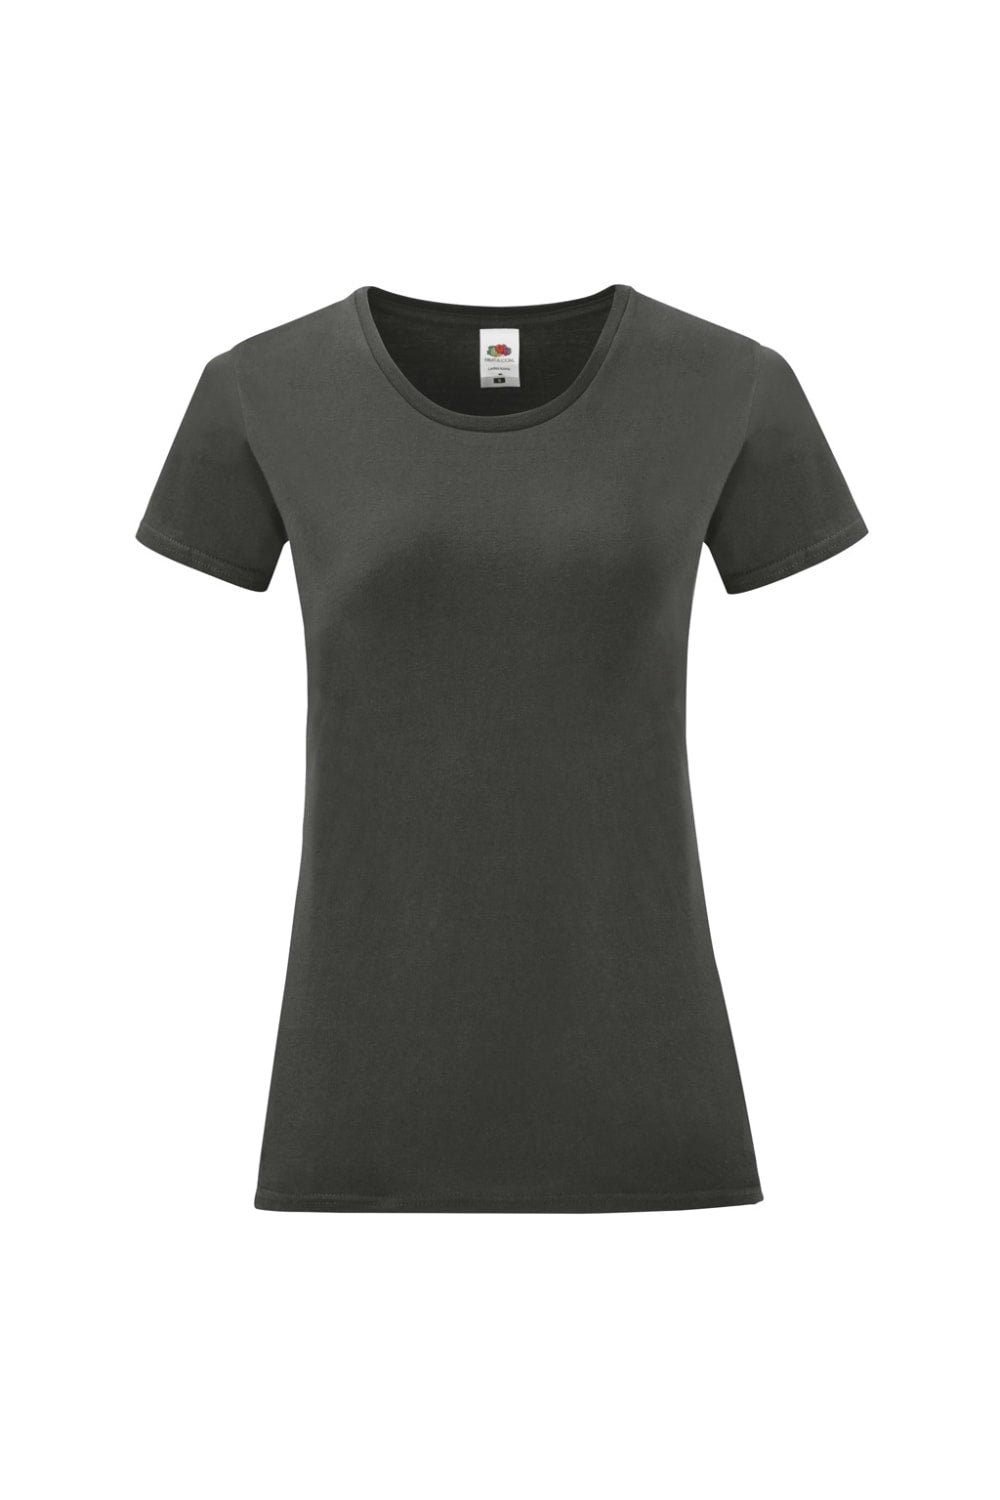 Womens/Ladies Iconic T-Shirt - Light Graphite